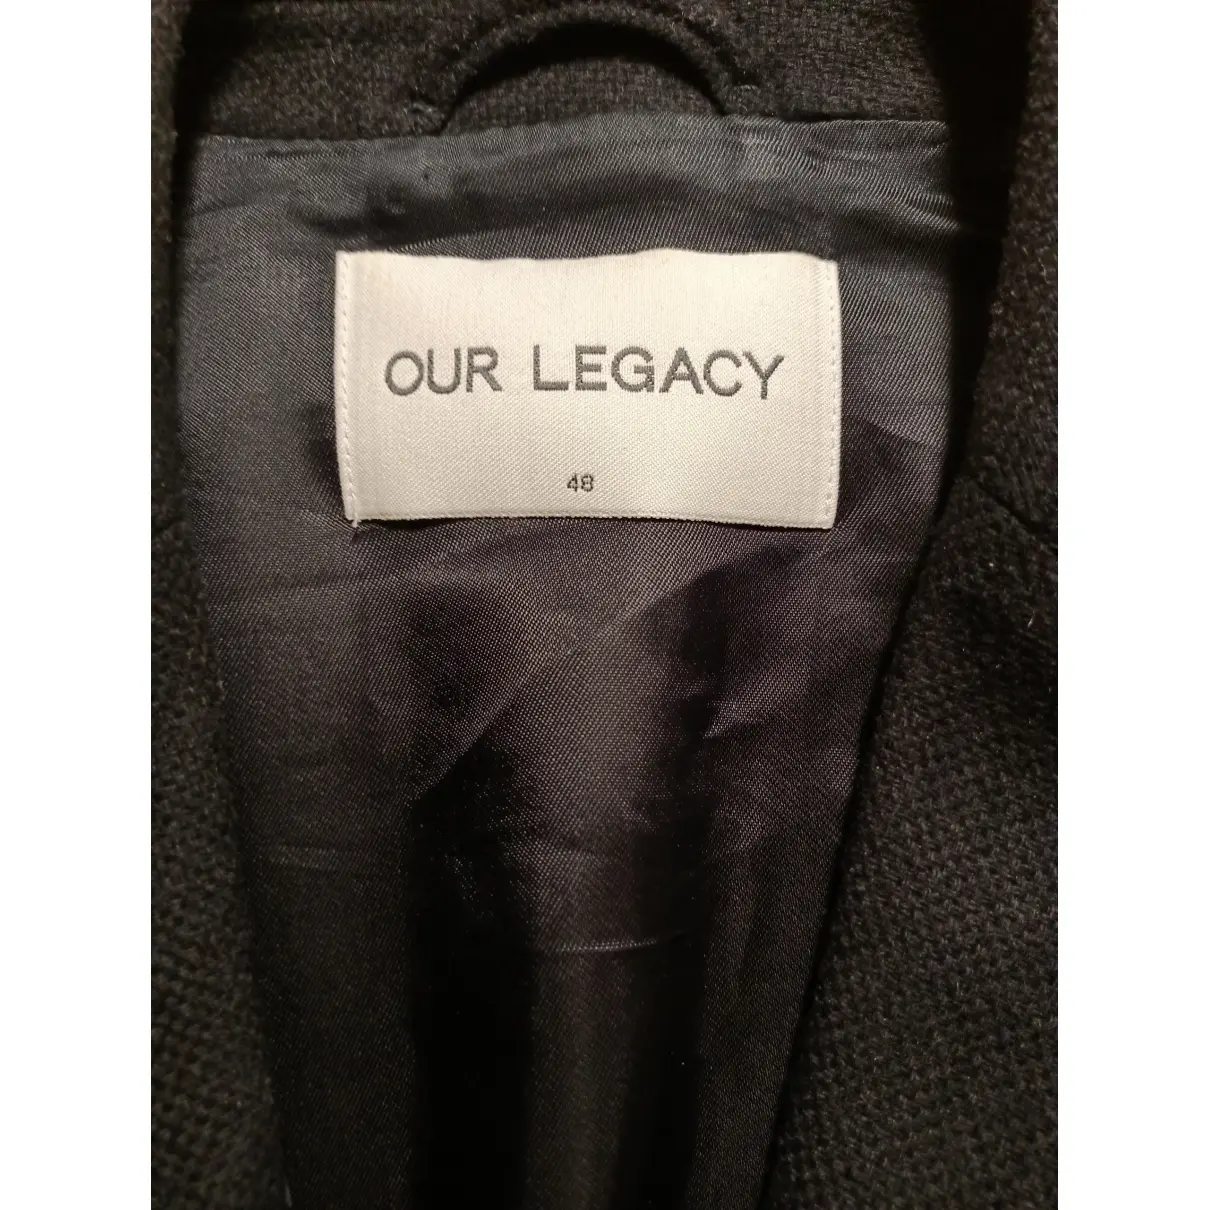 Buy Our Legacy Wool vest online